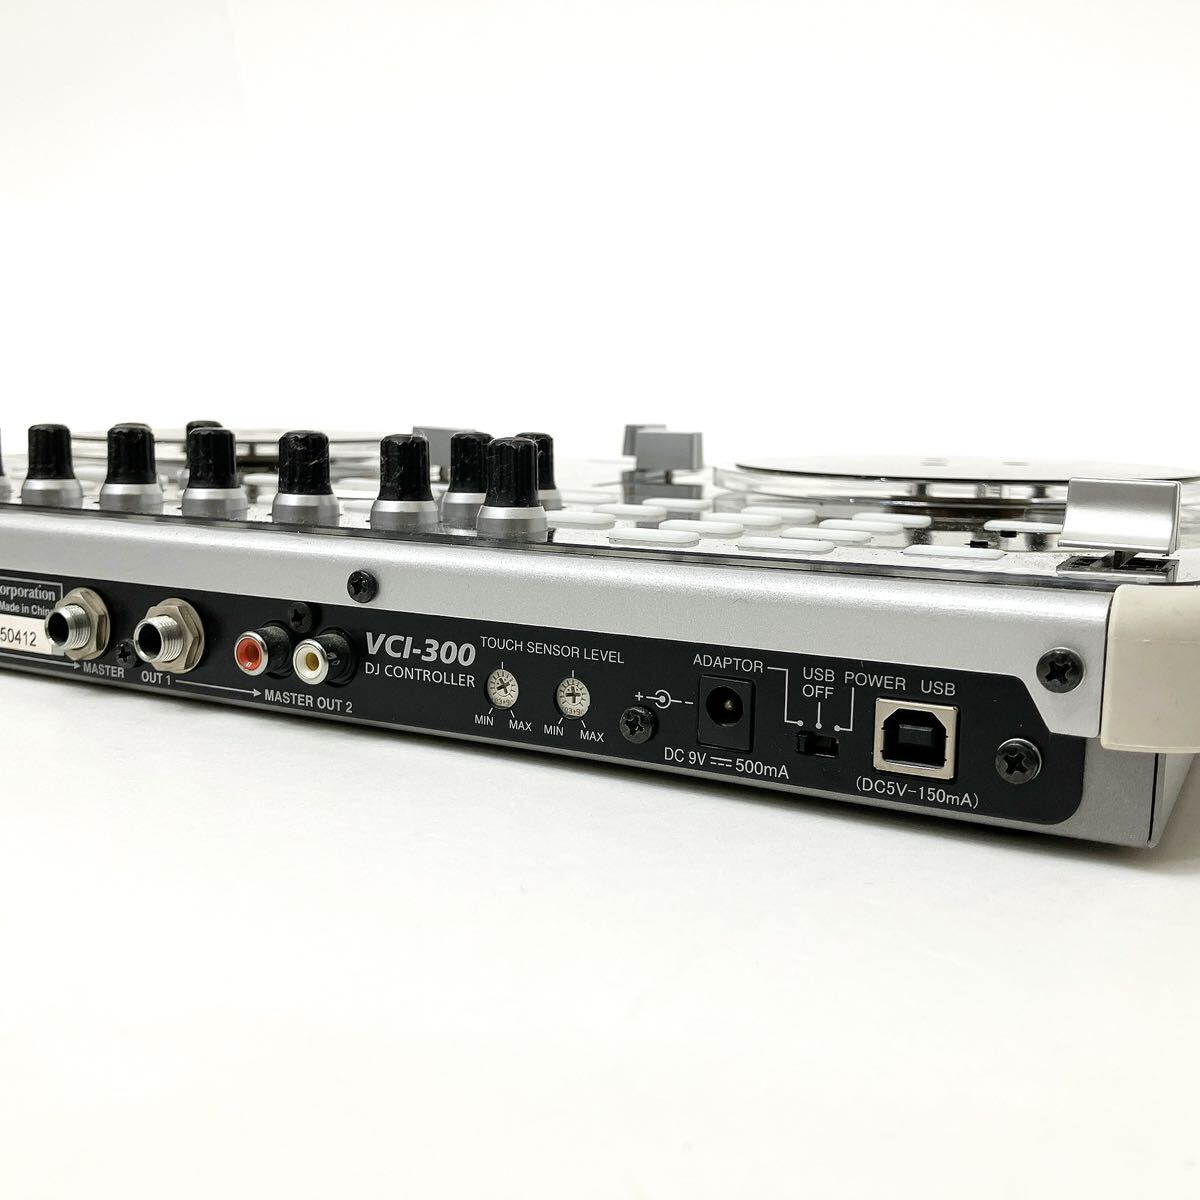 VESTAXbe старт ksVCI-300 DJ контроллер звук оборудование электризация проверка settled alp скала 0422